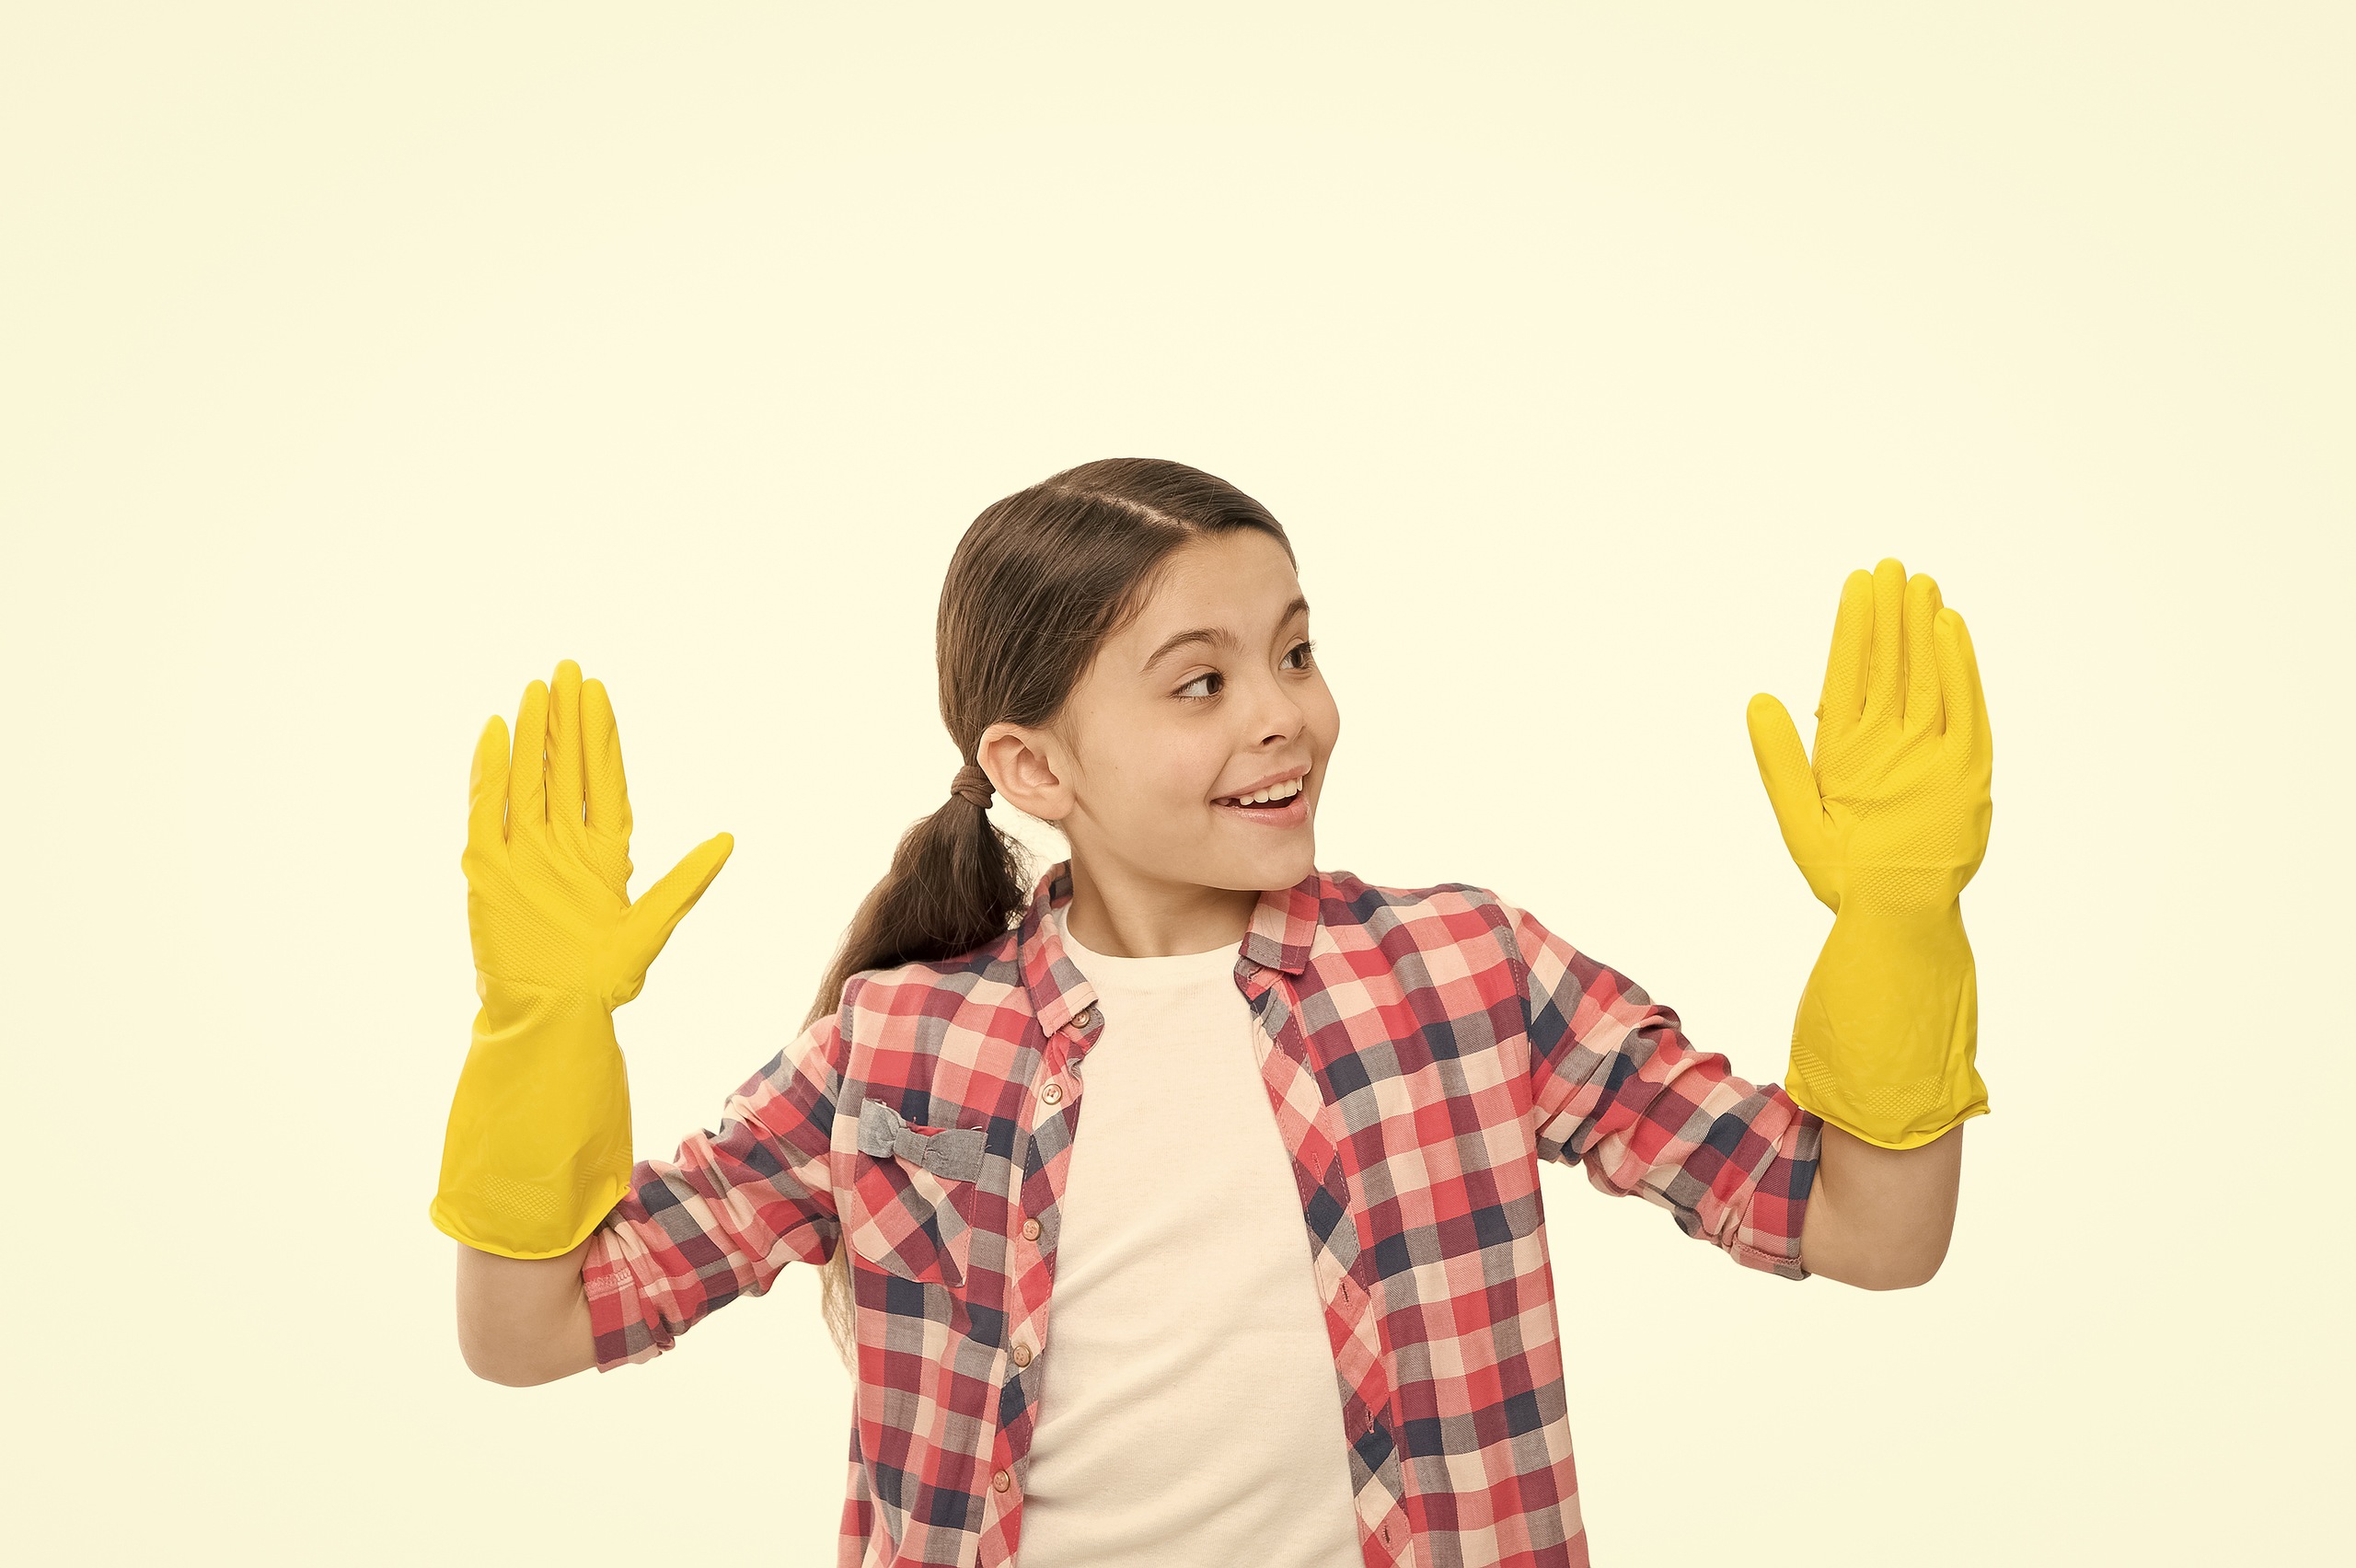 bigstock-General-Clean-Up-Yellow-Glove-410067877.jpg